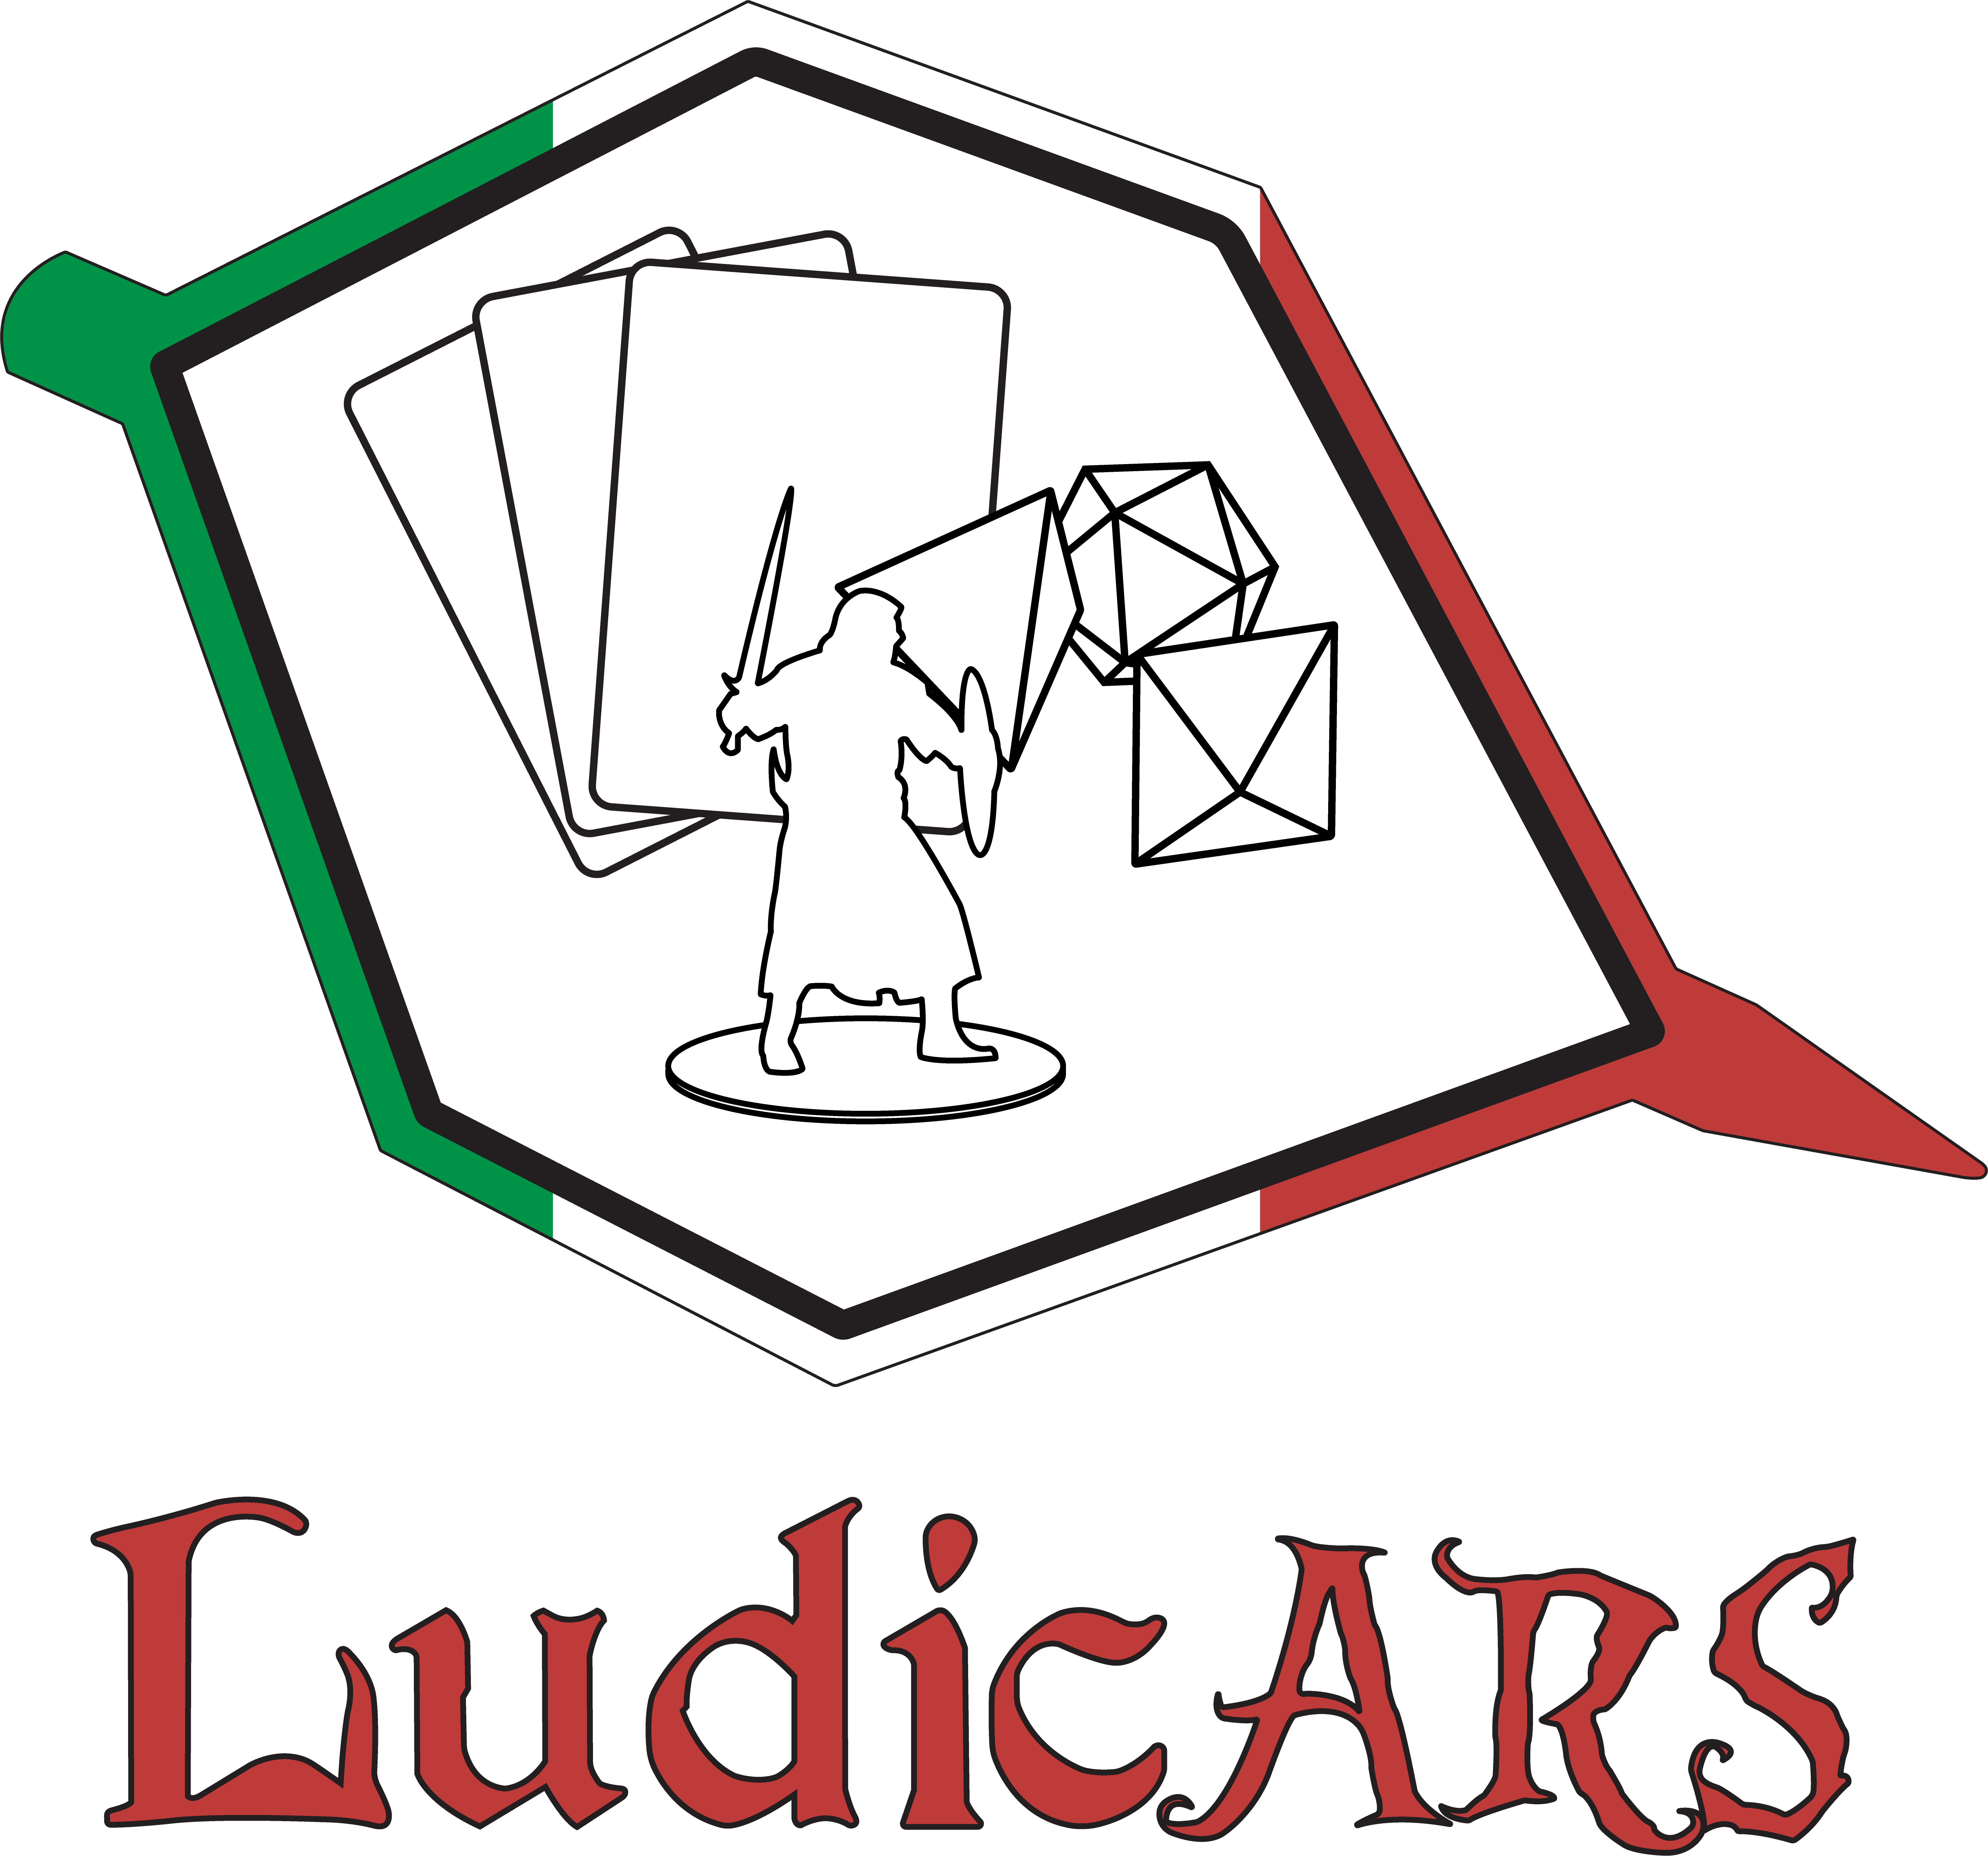 Ludicars APS